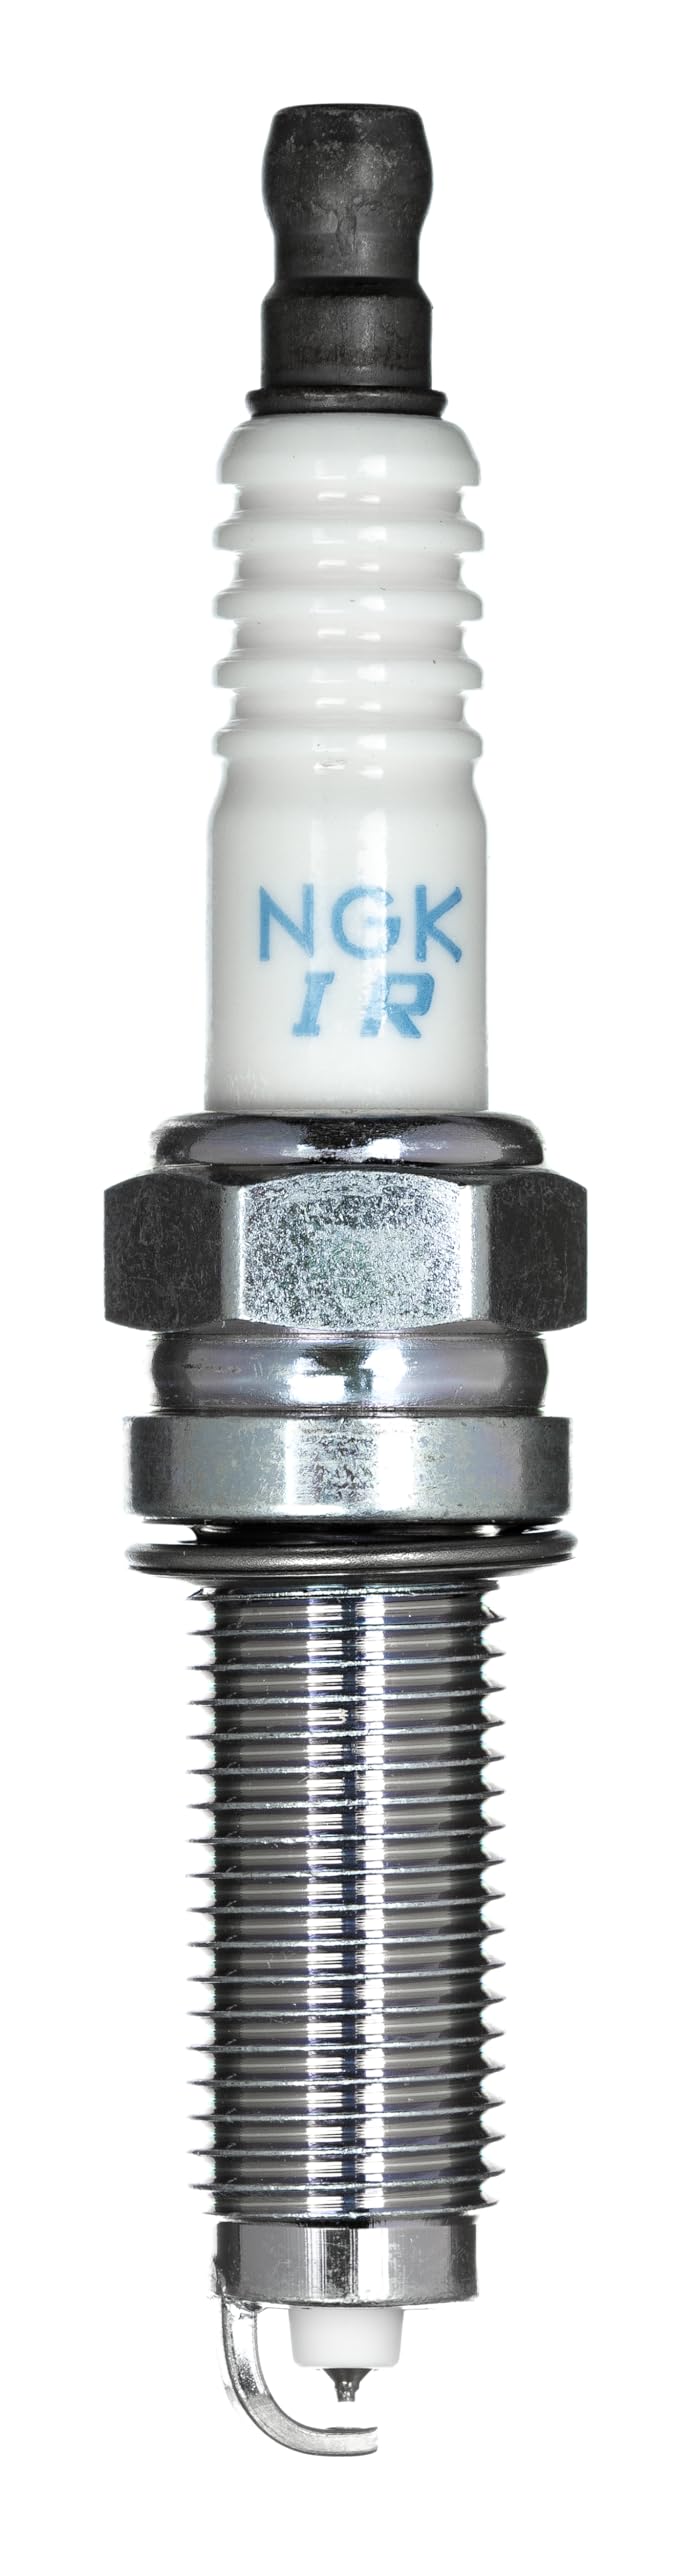 NGK Zündkerze ILZKR7G7G, 90219 | Laser Iridium | 1 Stück von NGK